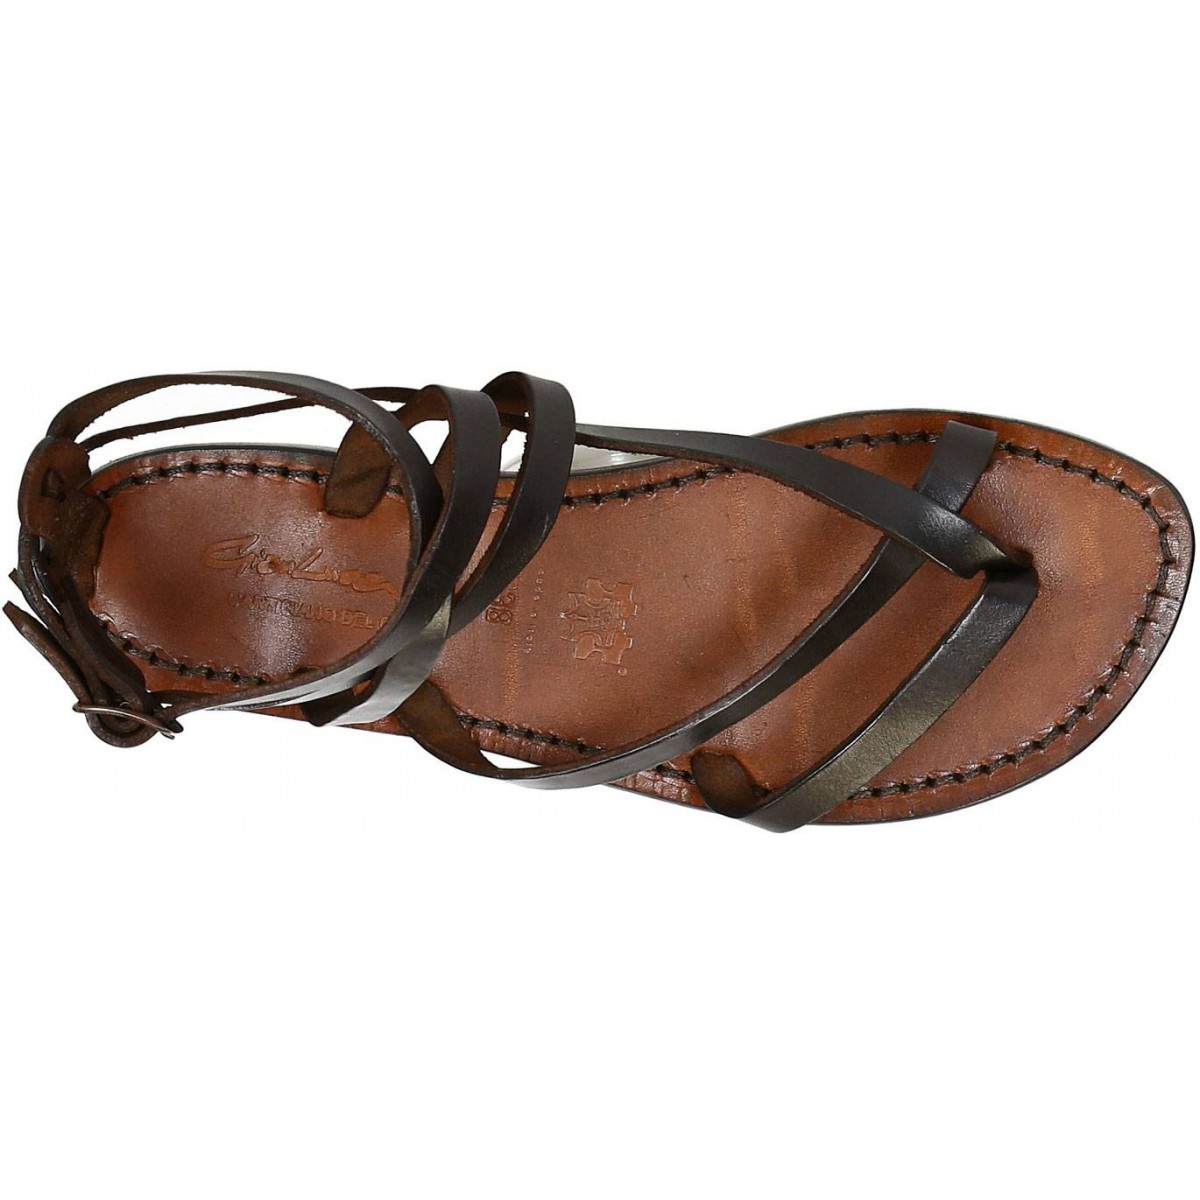 Handmade womens flat sandals in dark brown leather | The leather craftsmen